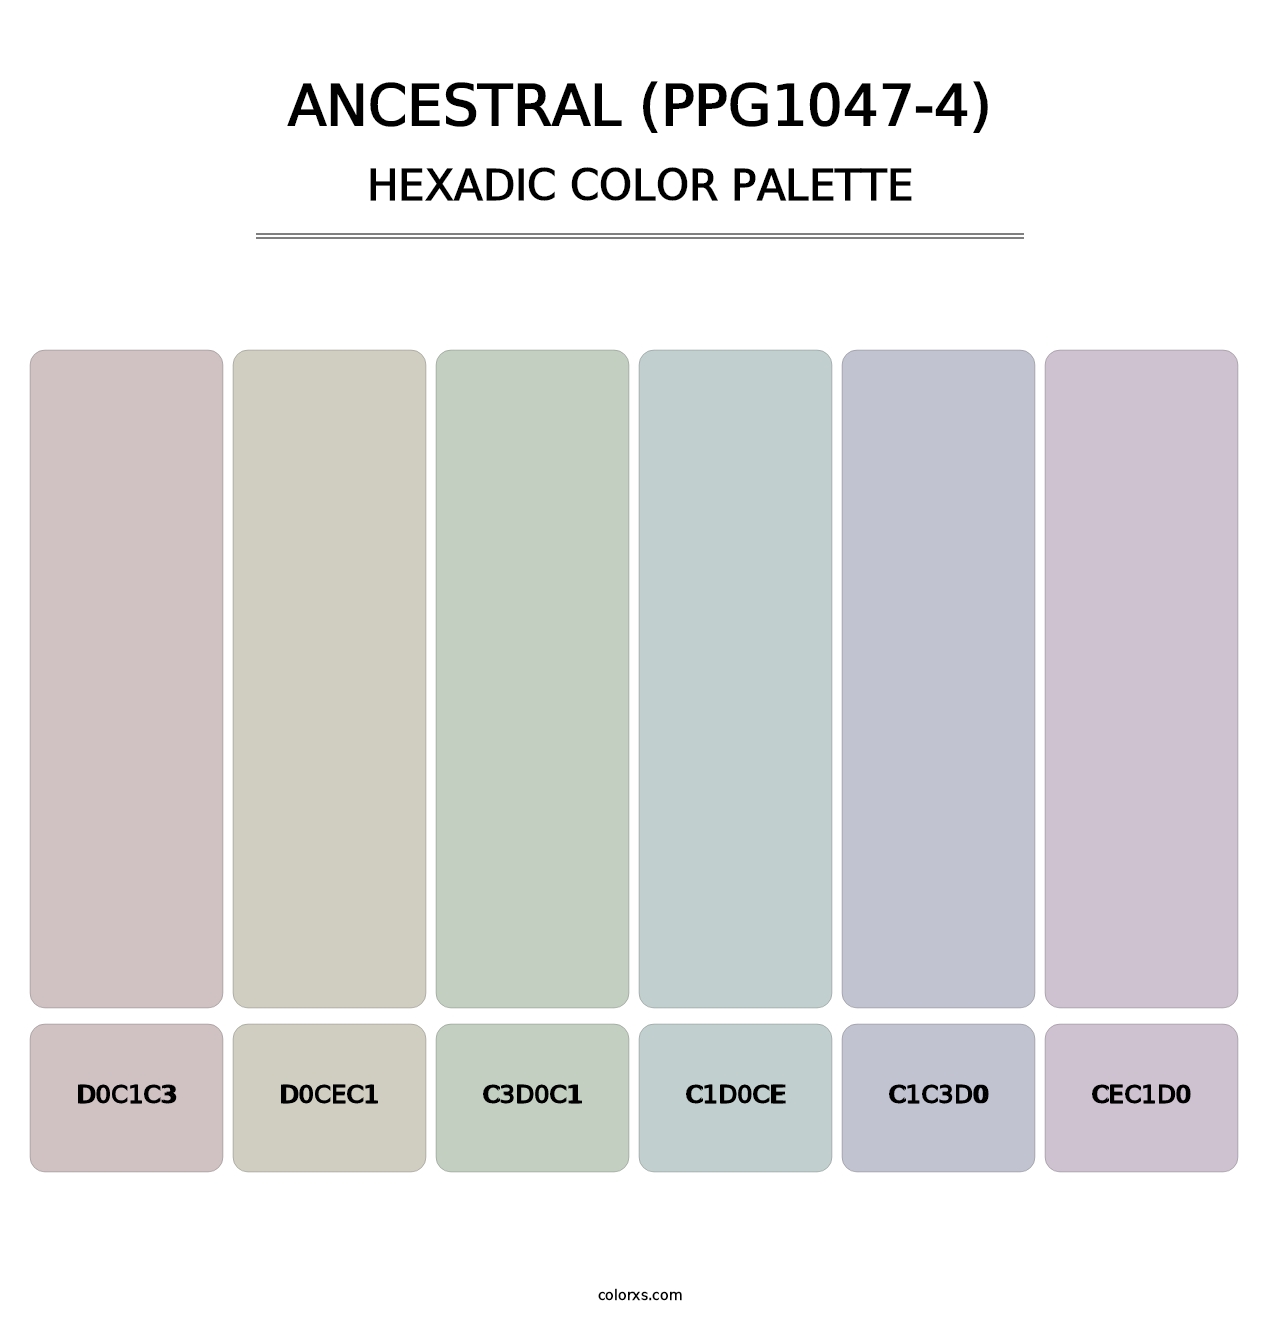 Ancestral (PPG1047-4) - Hexadic Color Palette